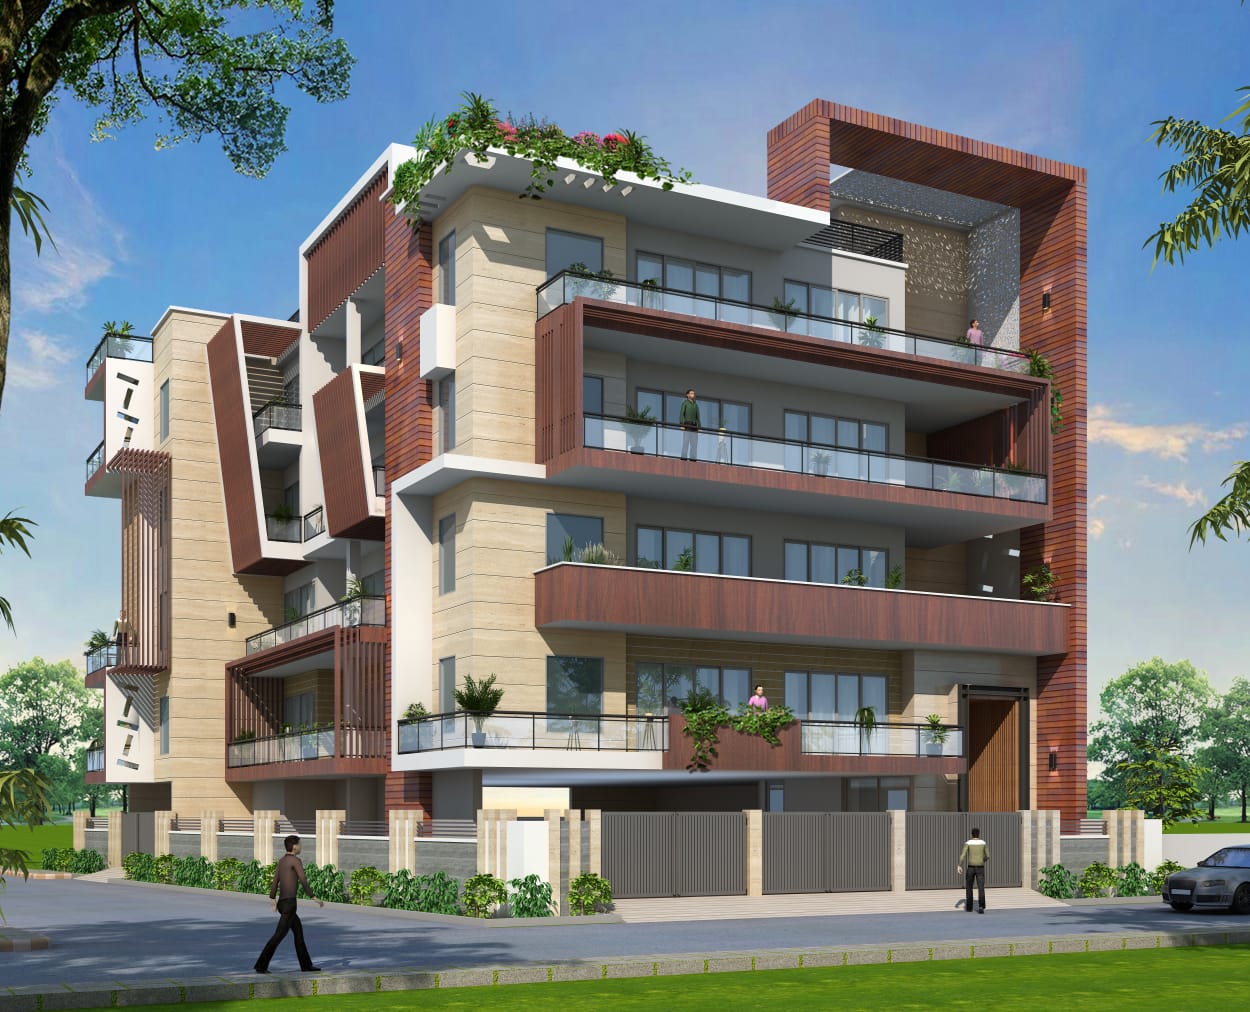 700 sq.yds, 4 BHK Builder Floor in Sushant Lok-1 A-Block, Gurgaon